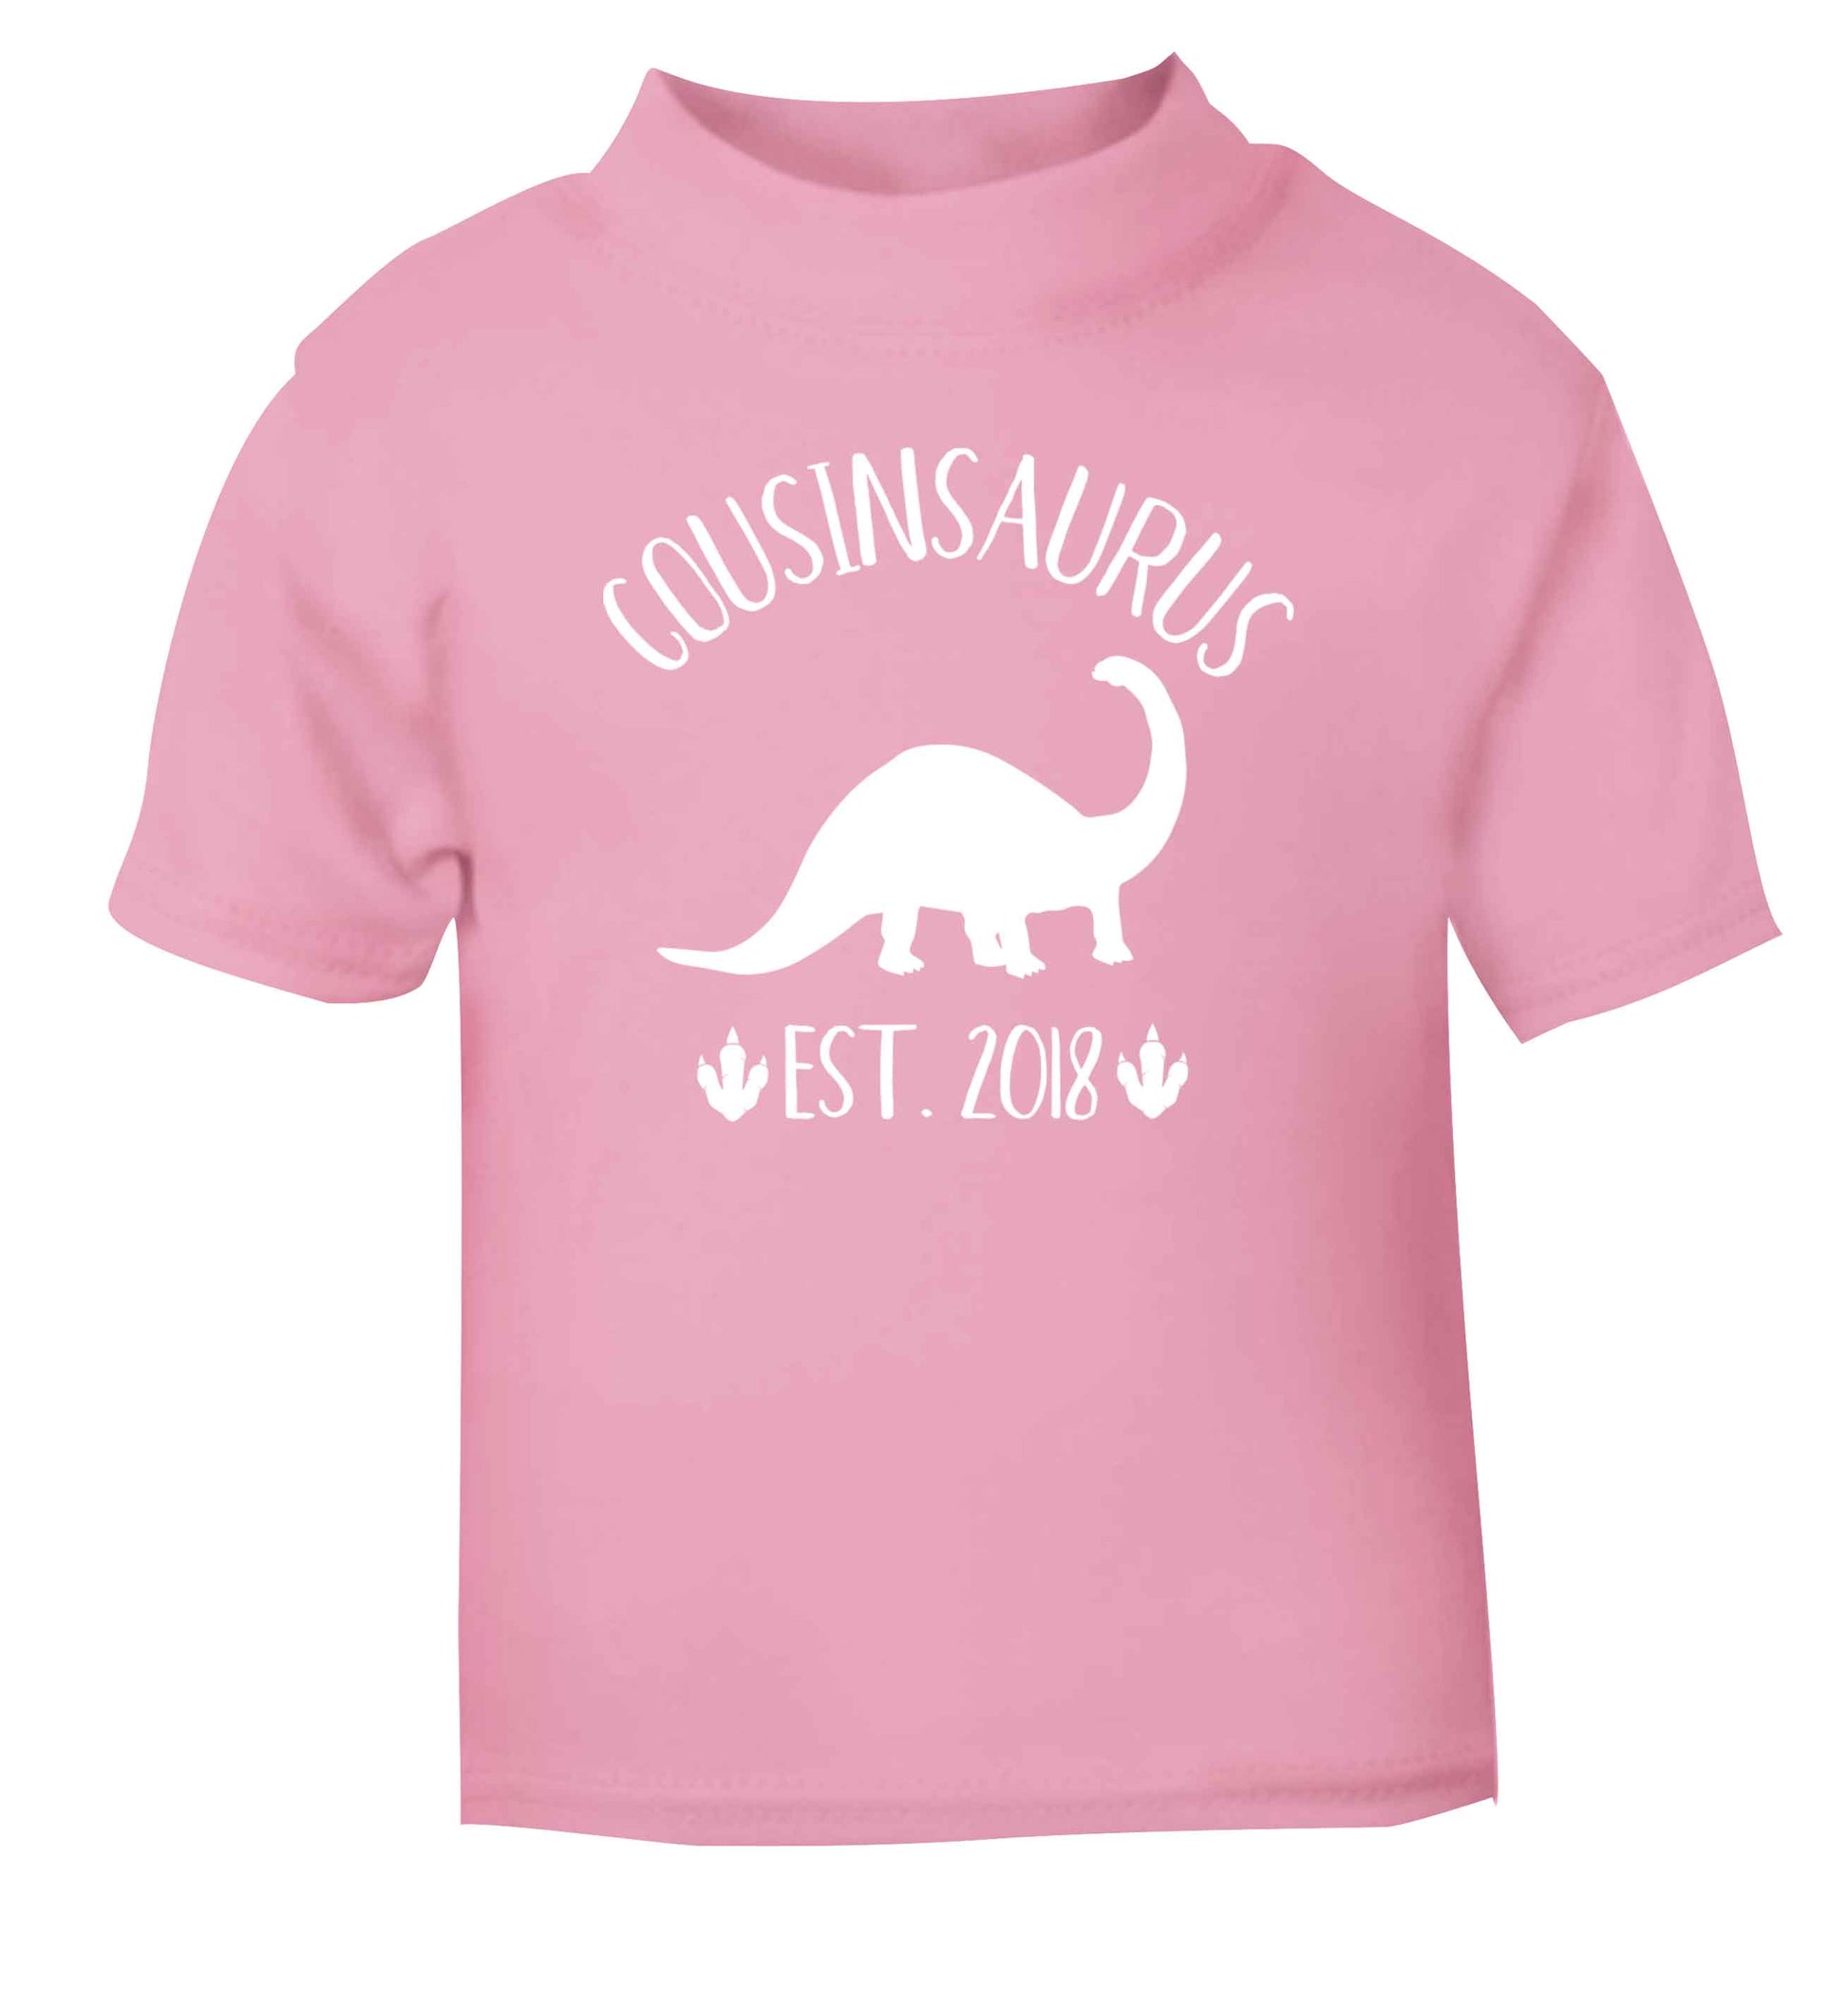 Personalised cousinsaurus since (custom date) light pink Baby Toddler Tshirt 2 Years